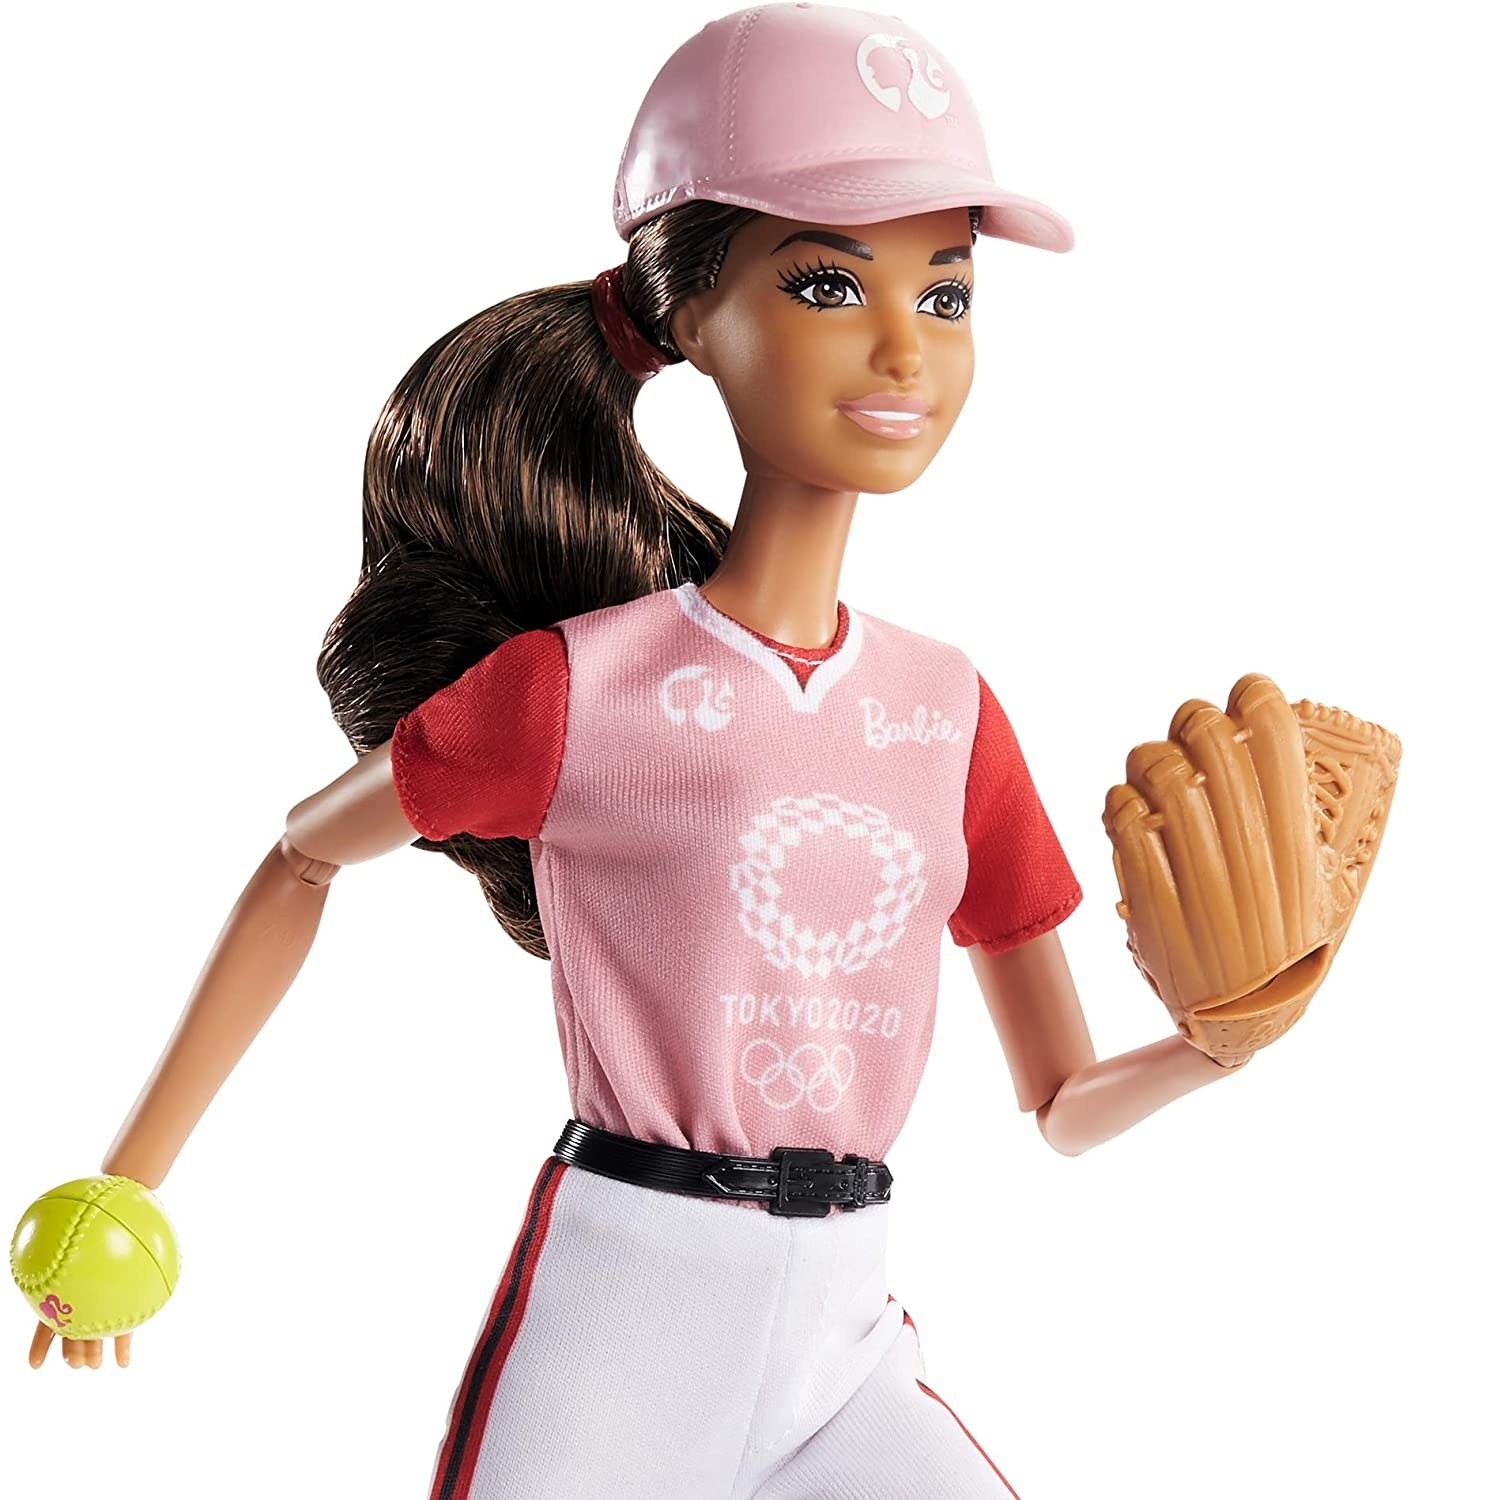 Doll 2020. Кукла Барби бейсболистка. Кукла Barbie Олимпийская спортсменка. Барби спортсменка бейсболистка. Барби каратистка Токио 2020.